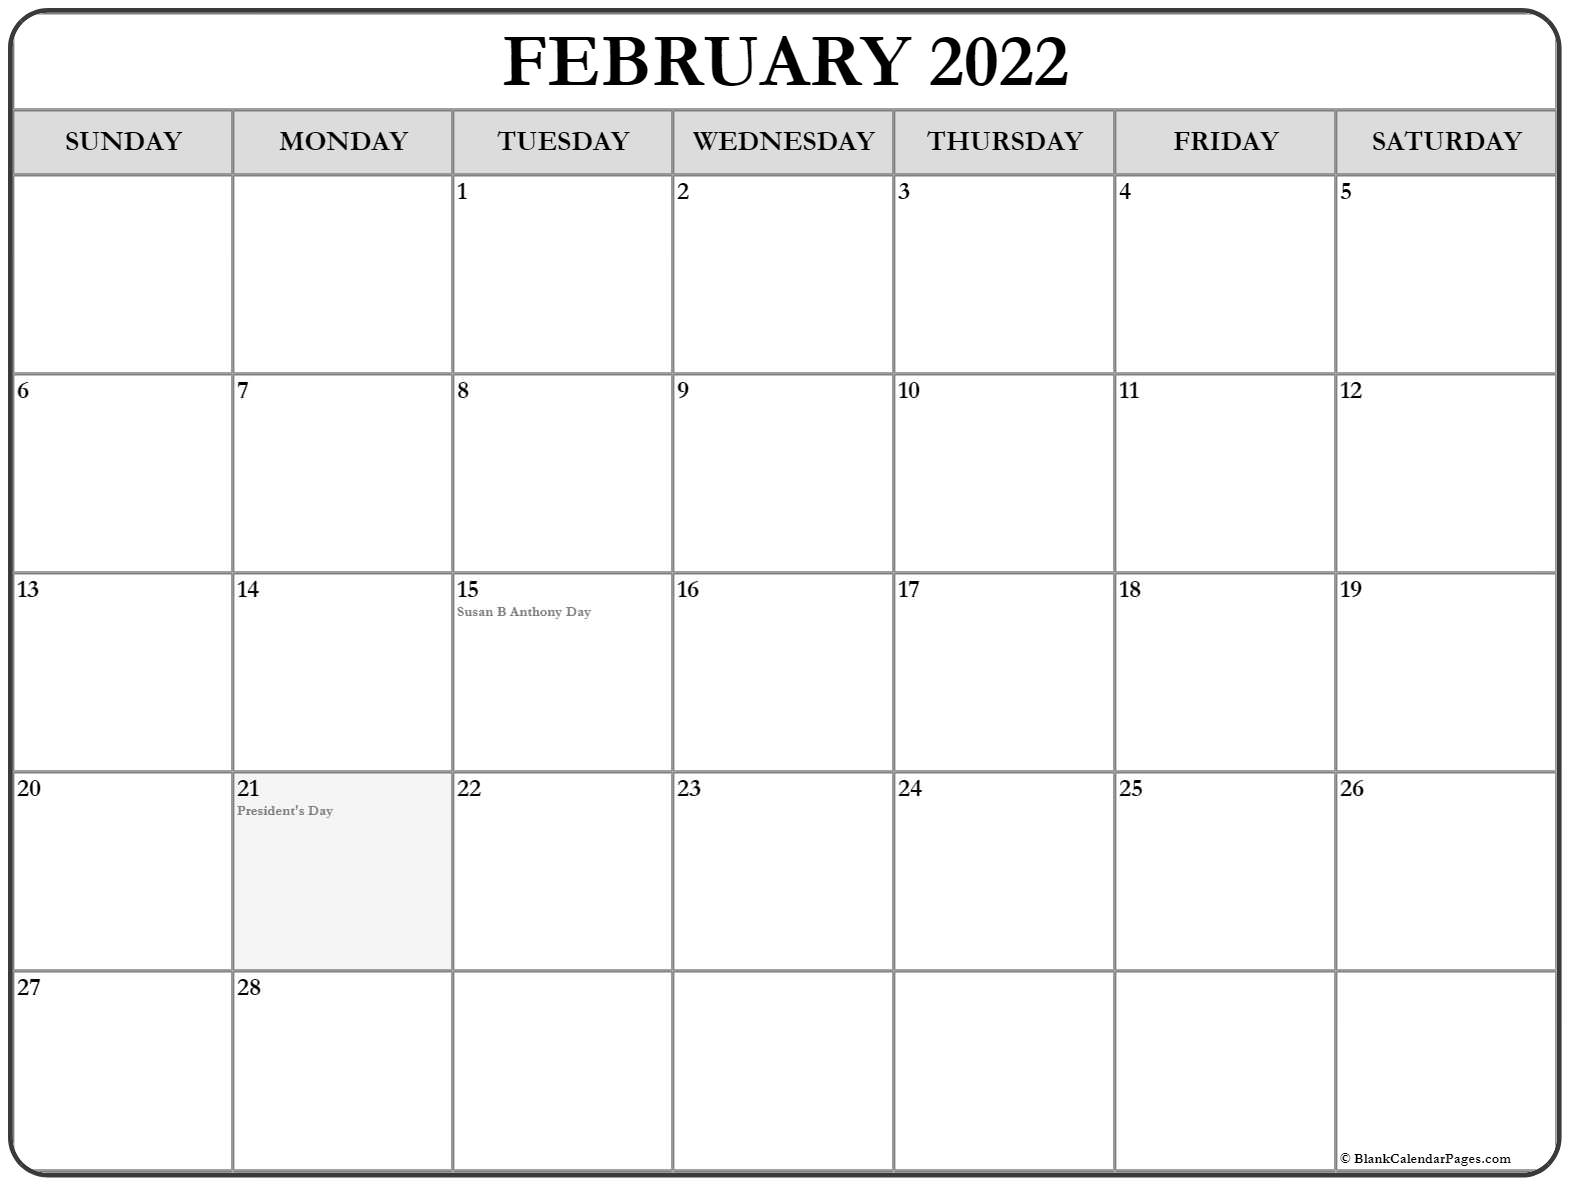 February 2022 With Holidays Calendar